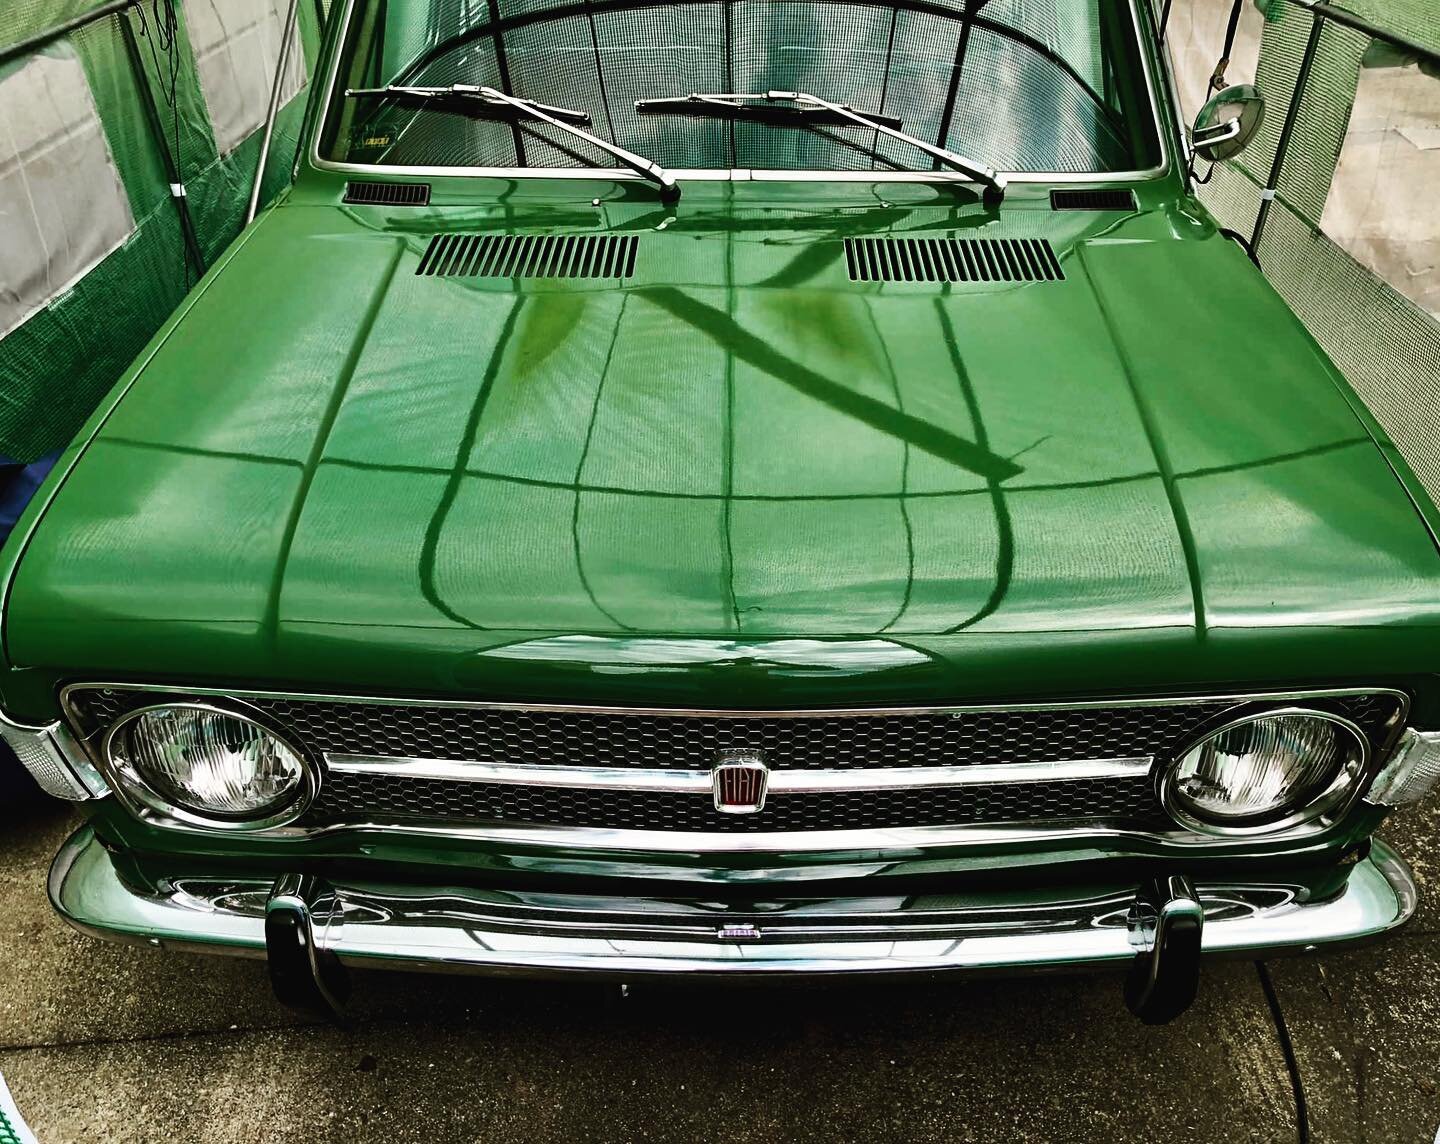 Fiat 128 berlina 1971 4porte
RestMod now
Lavoro in corso 

#fiatlovers  #italiancarsarebetter🇮🇹 #fiat128 #箱車 #レストア #旧車 #カーデザイン #cardesign #carlifestyle #イタリア車